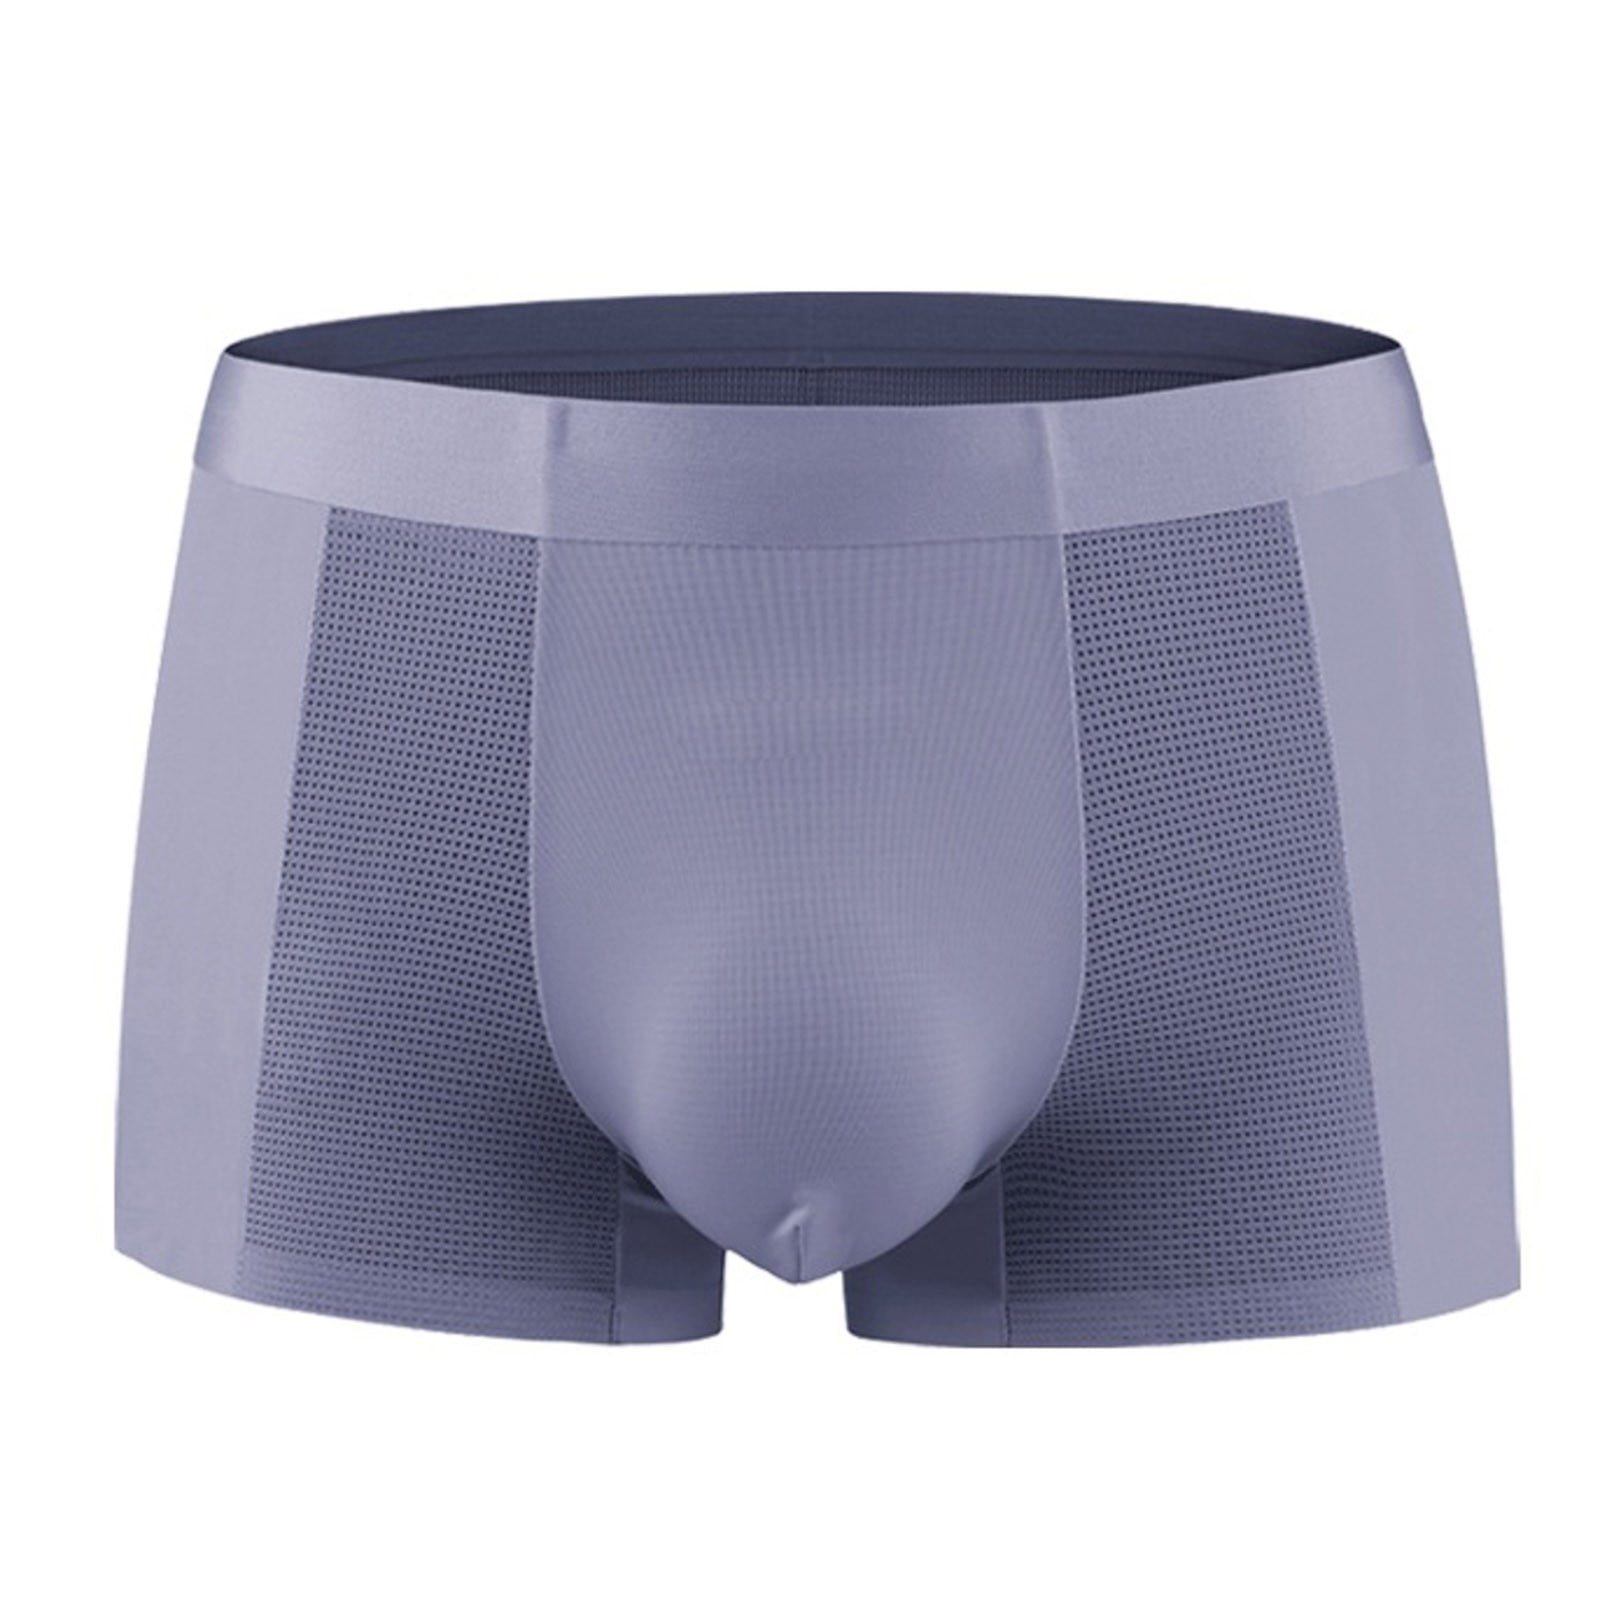 KaLI_store Men’s Underwear Men's Boxer Briefs No-ride Up Man Boxer  Comfortable Breathable Underwear for Men Blue,3XL